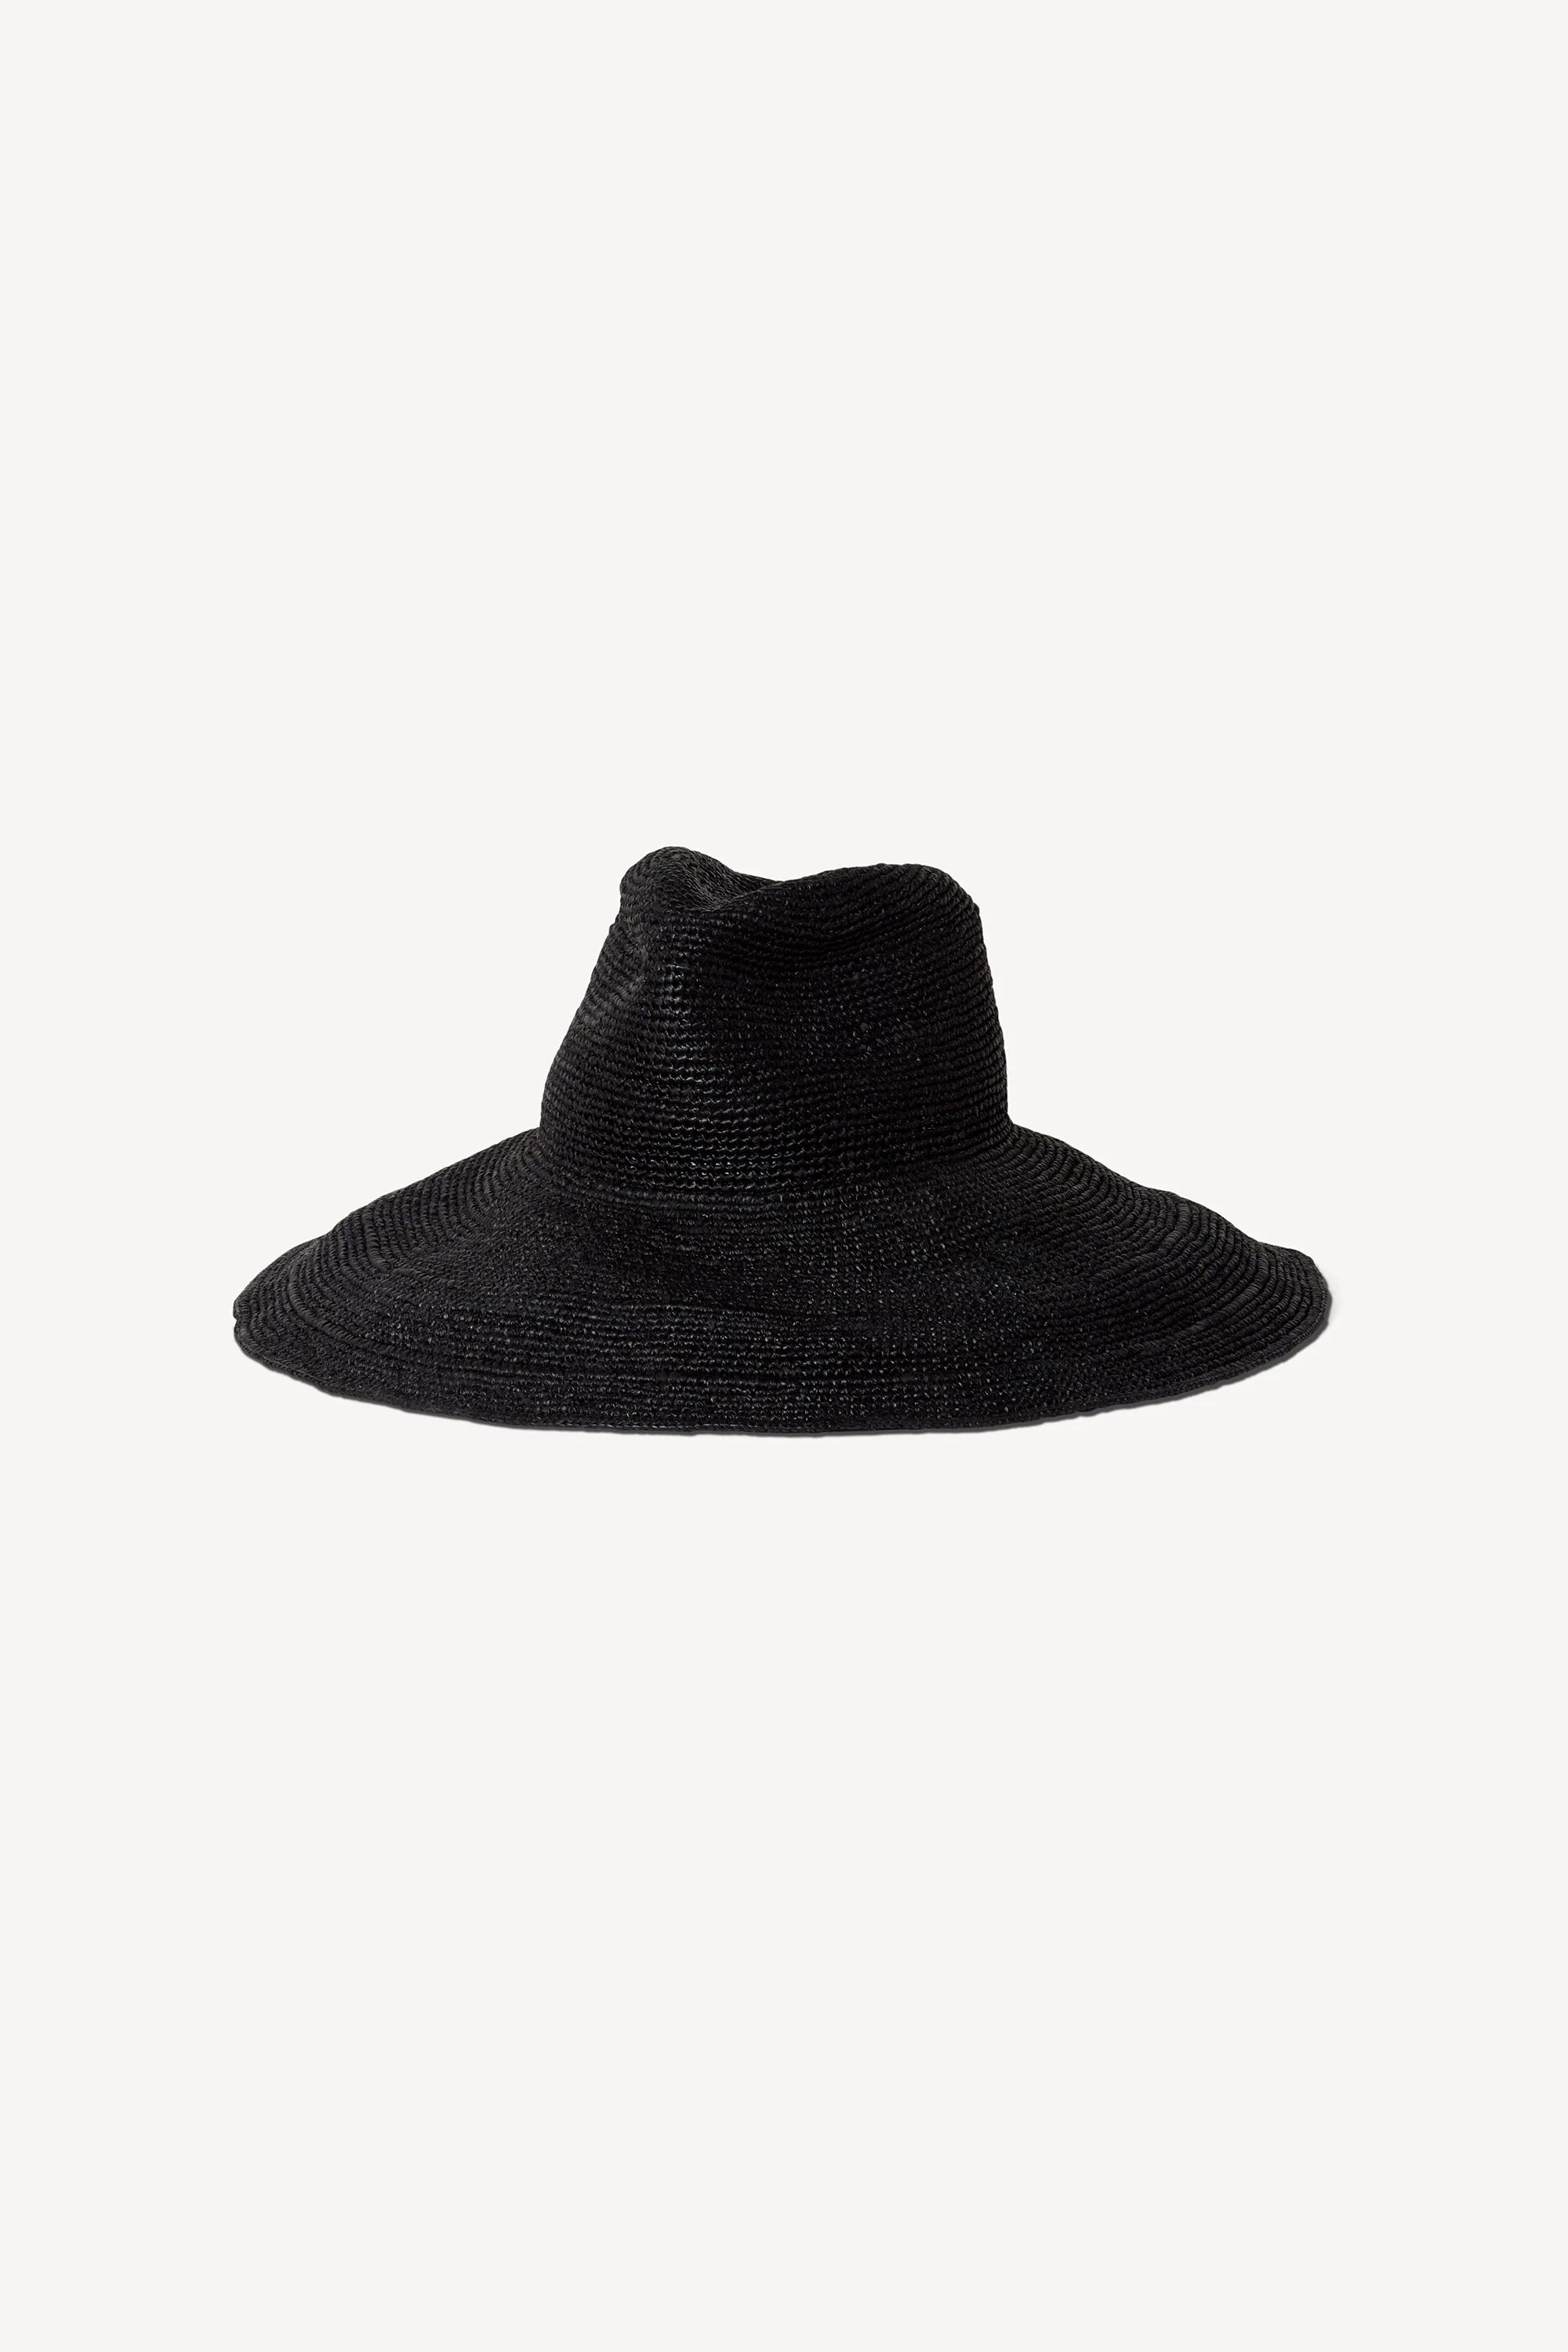 Waverly Hat | Janessa Leone